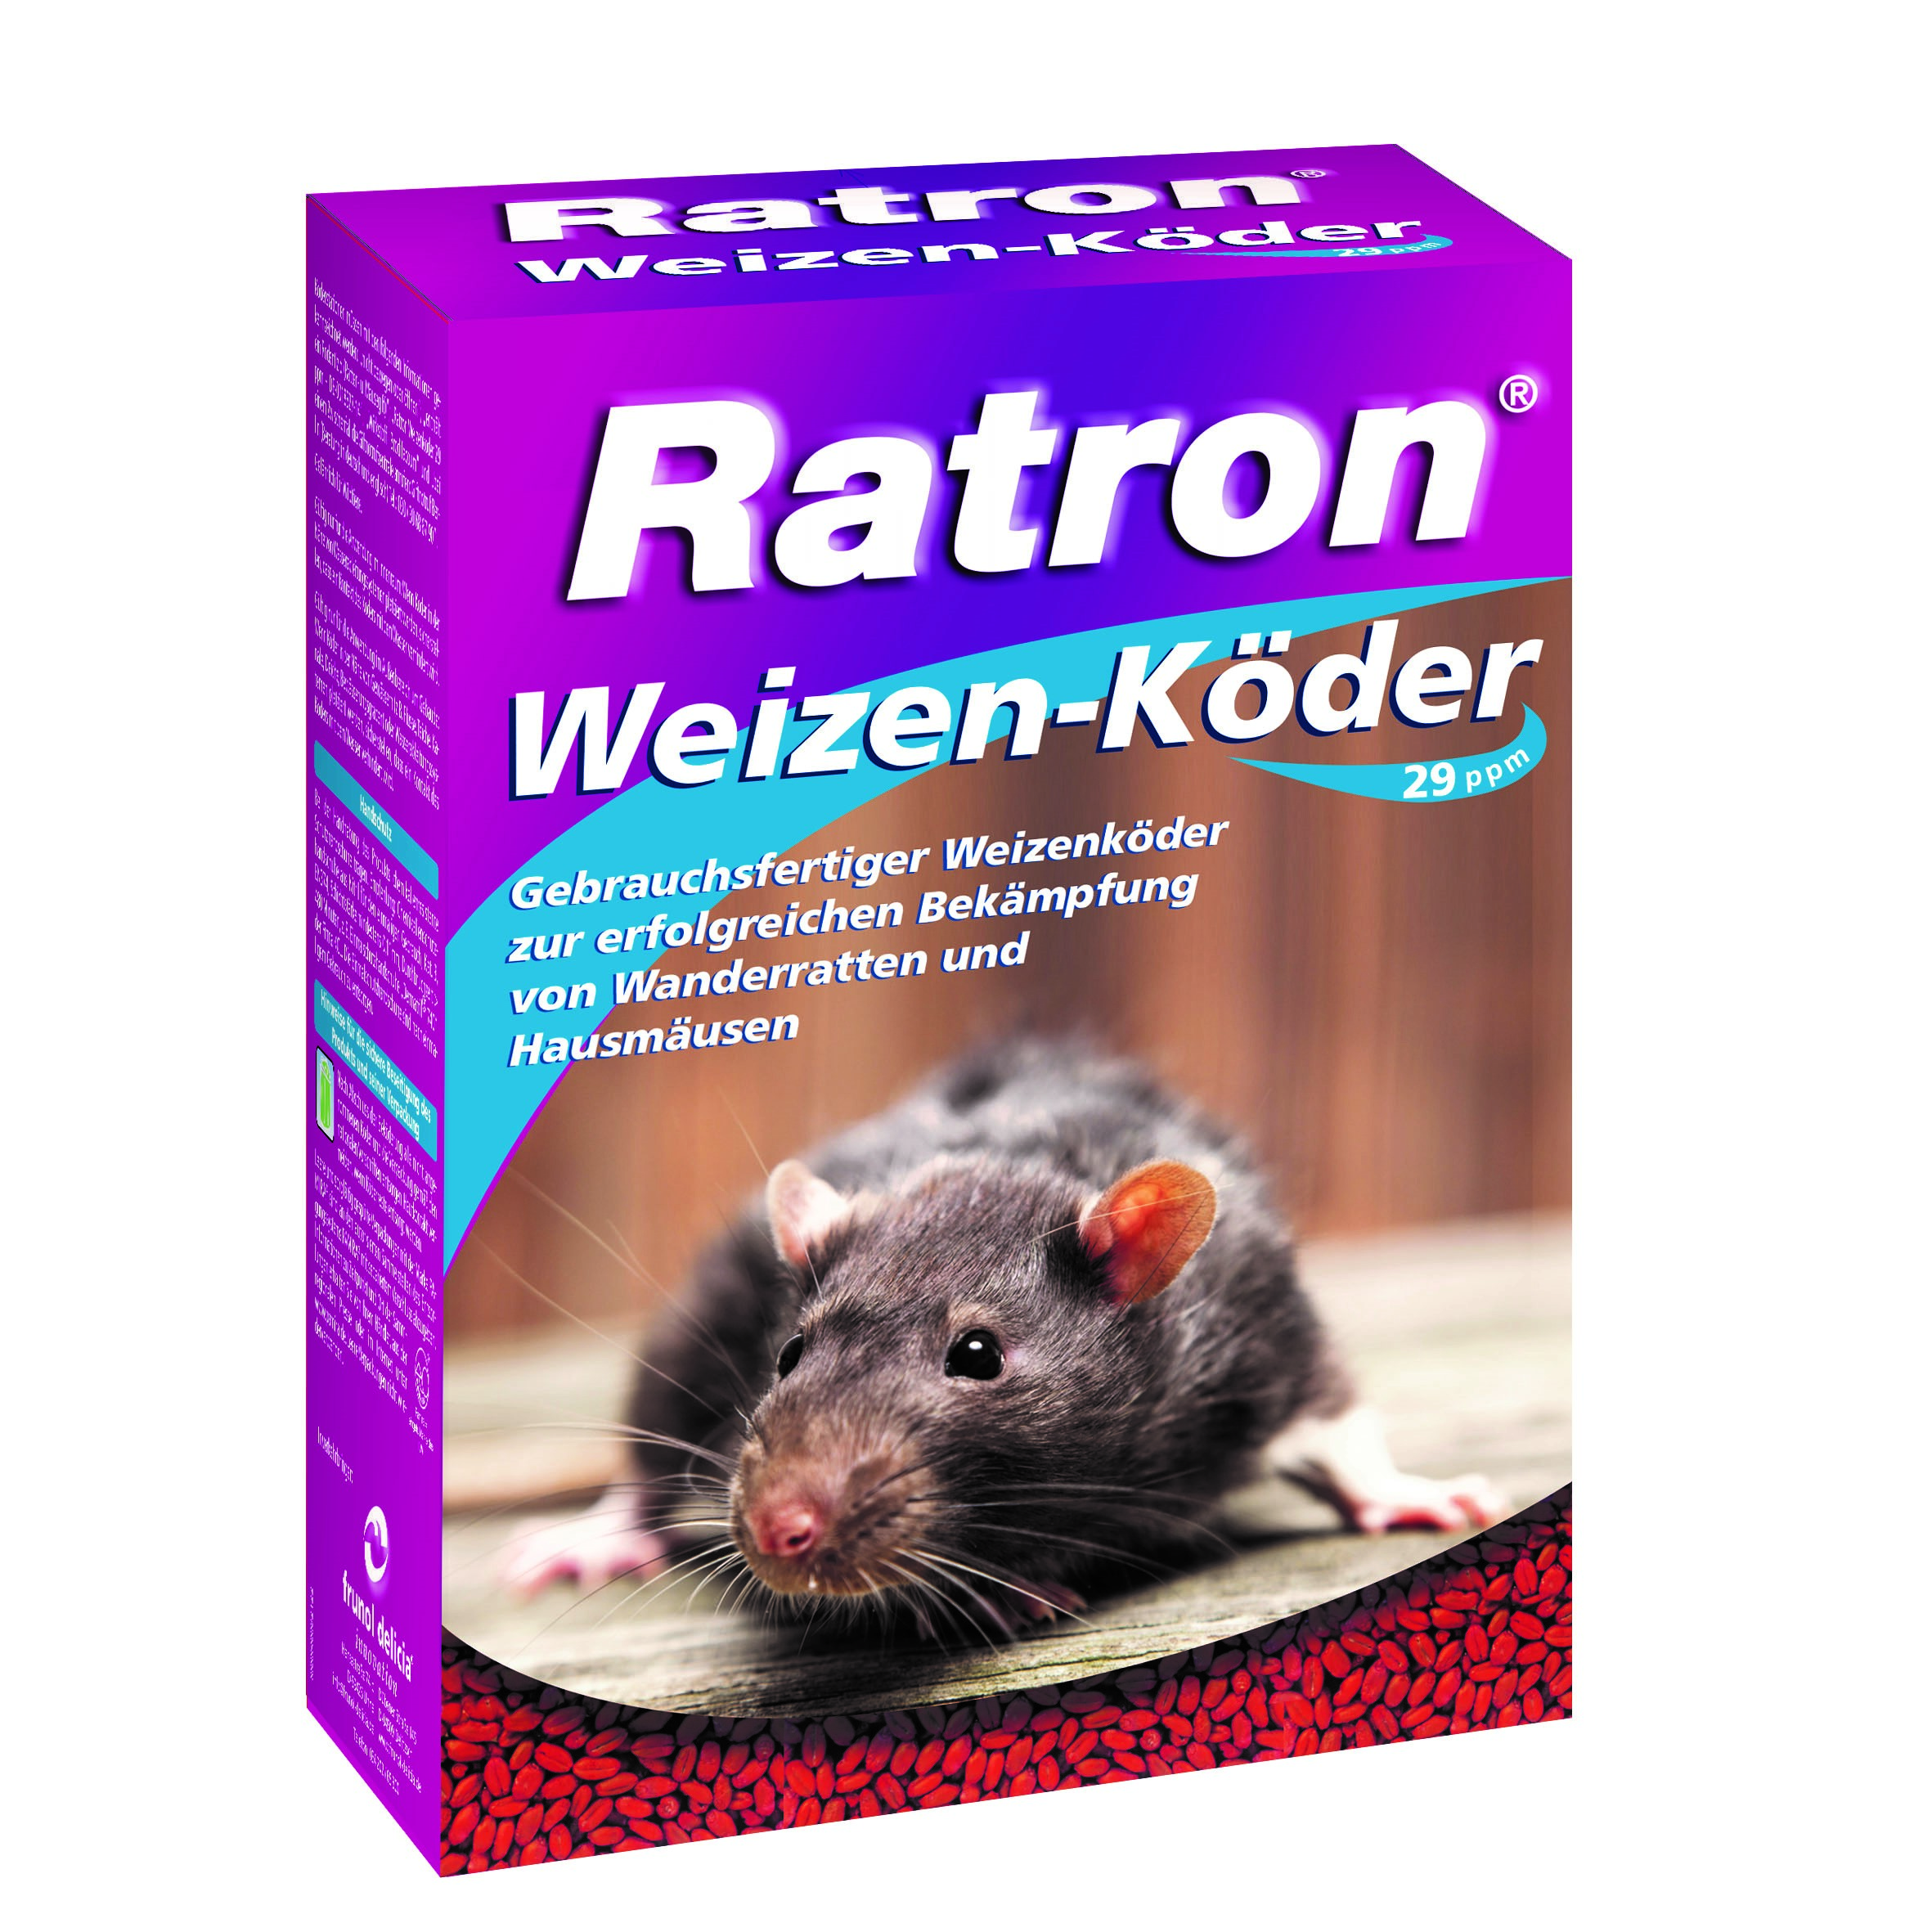 Ratron® Weizen-Köder 29 ppm Ratten- und Mäusebekämpfung 8 x 50g 